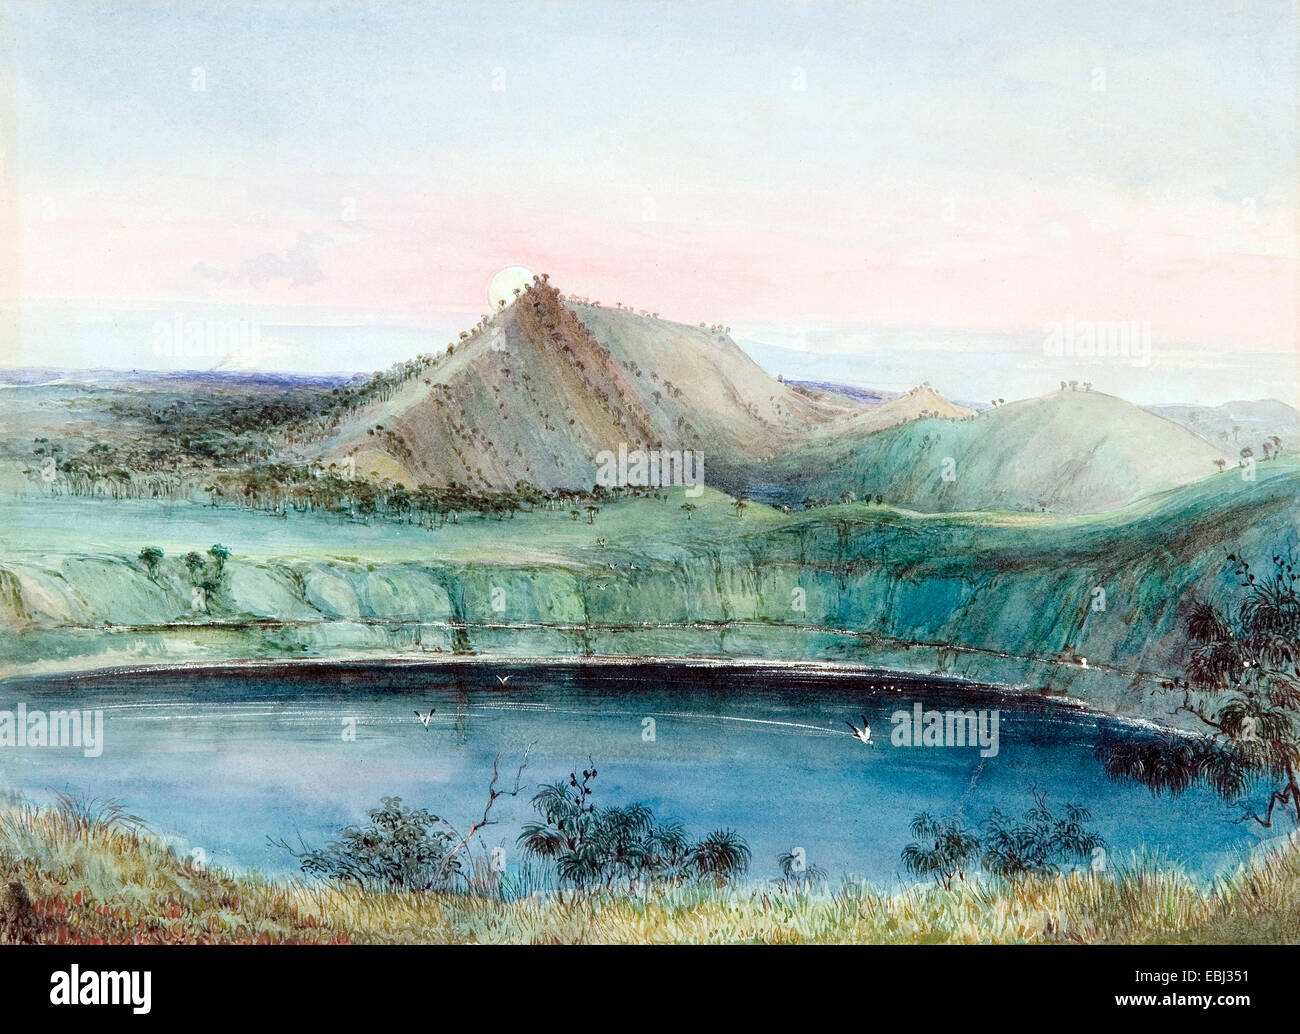 George französischen Angas, Blue Lake, Mount Gambier. 1844-Aquarell. Art Gallery of South Australia, North Terrace, Australien. Stockfoto